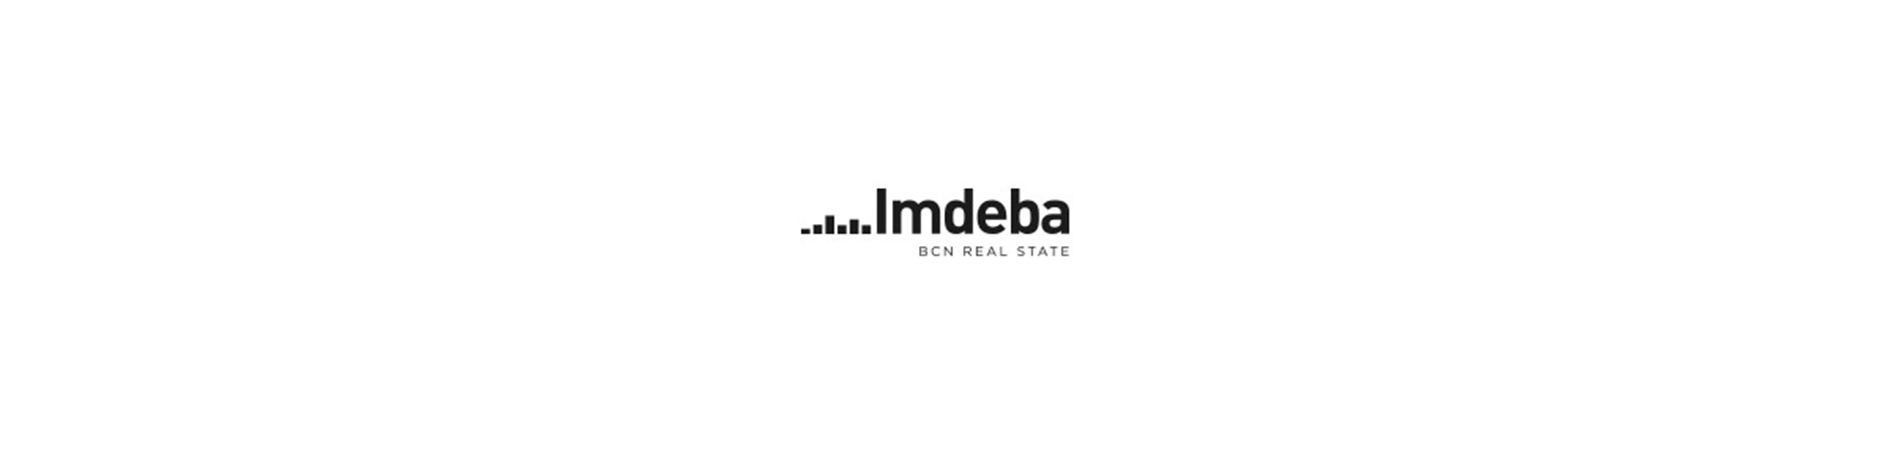 Nueva página web para Imdeba